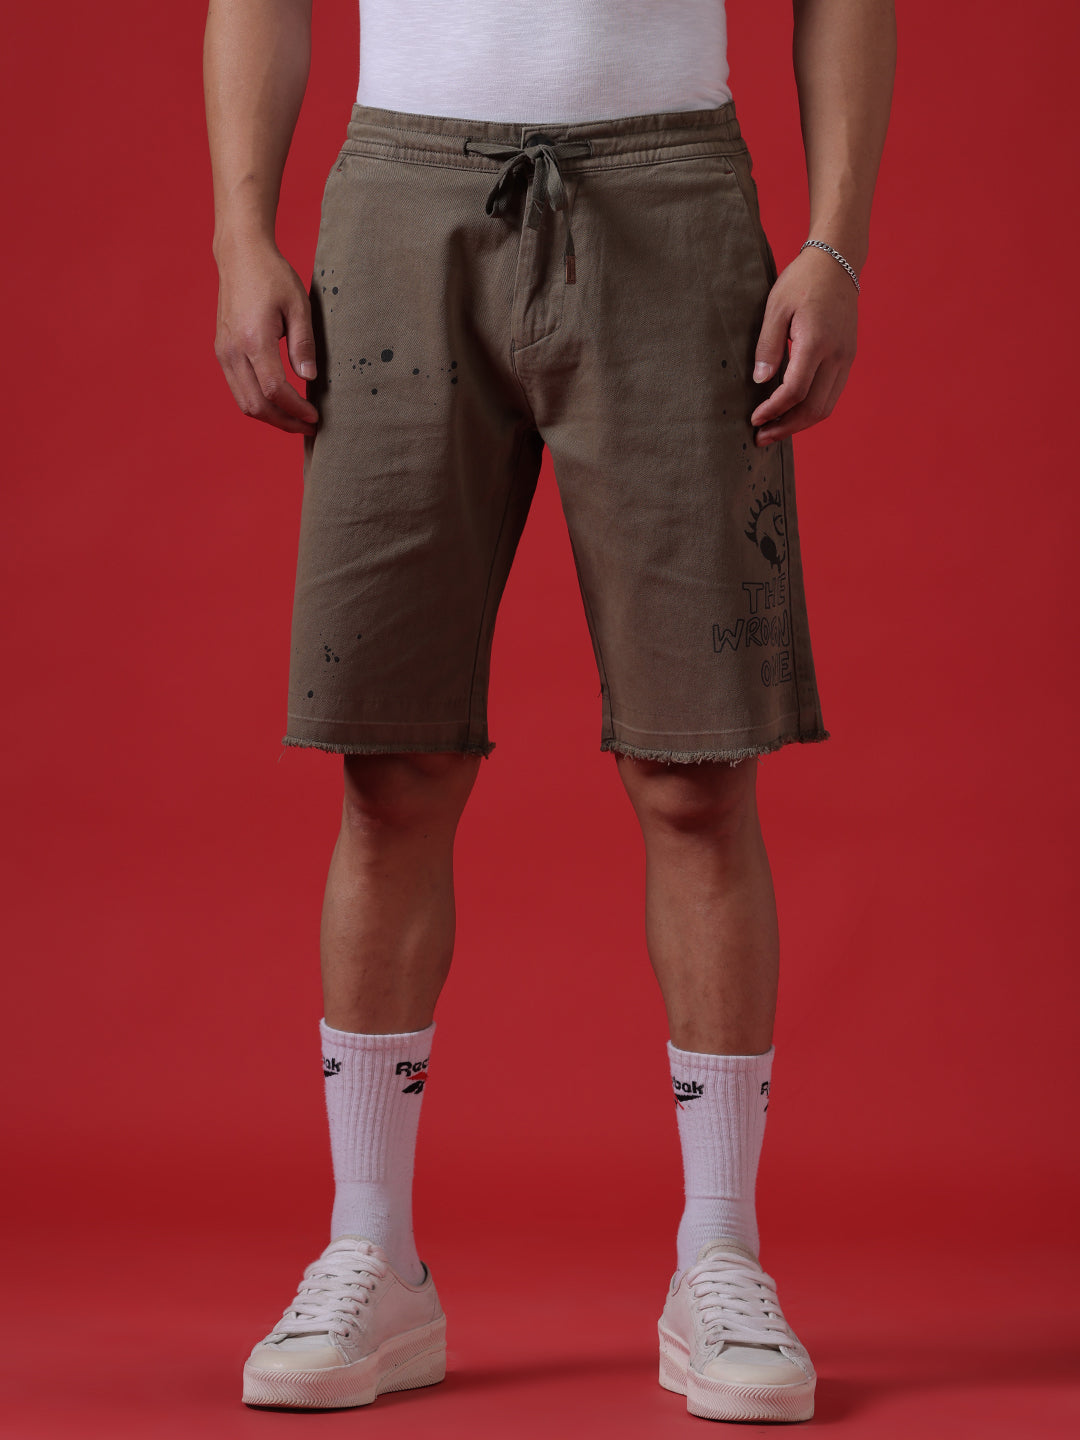 AK Beige Shorts